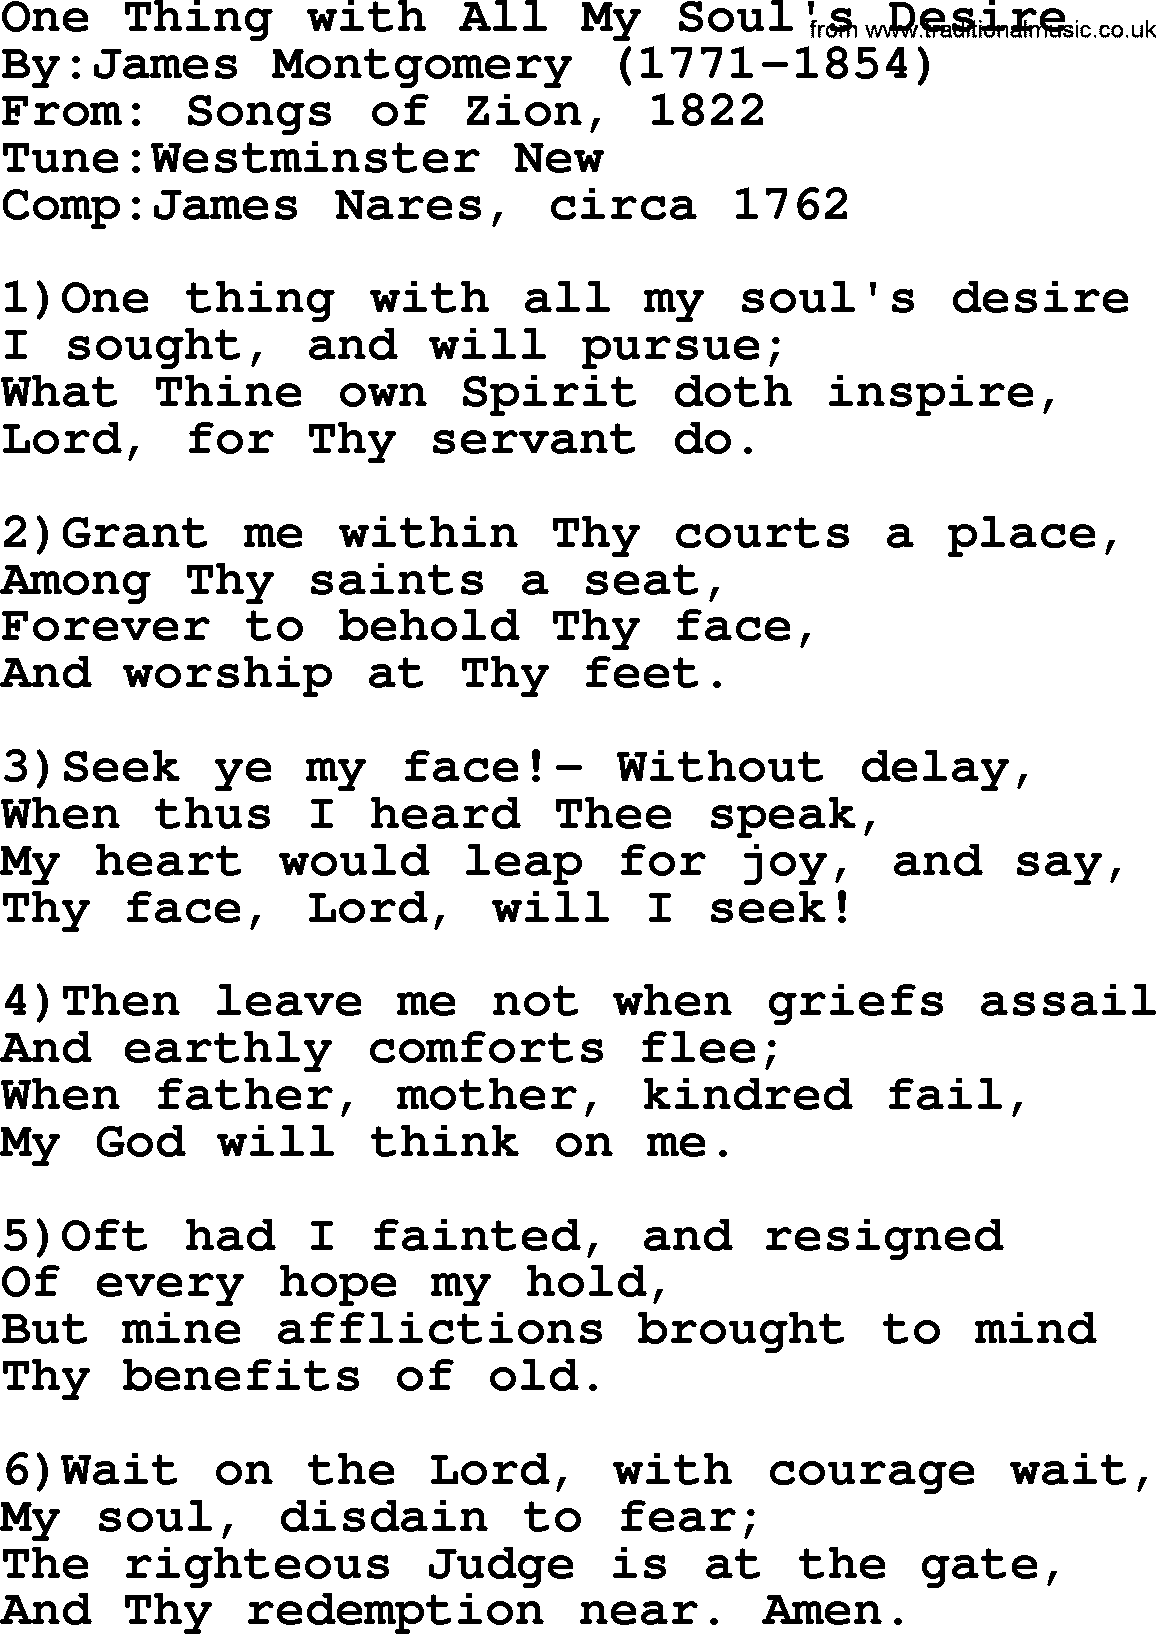 Methodist Hymn: One Thing With All My Soul's Desire, lyrics